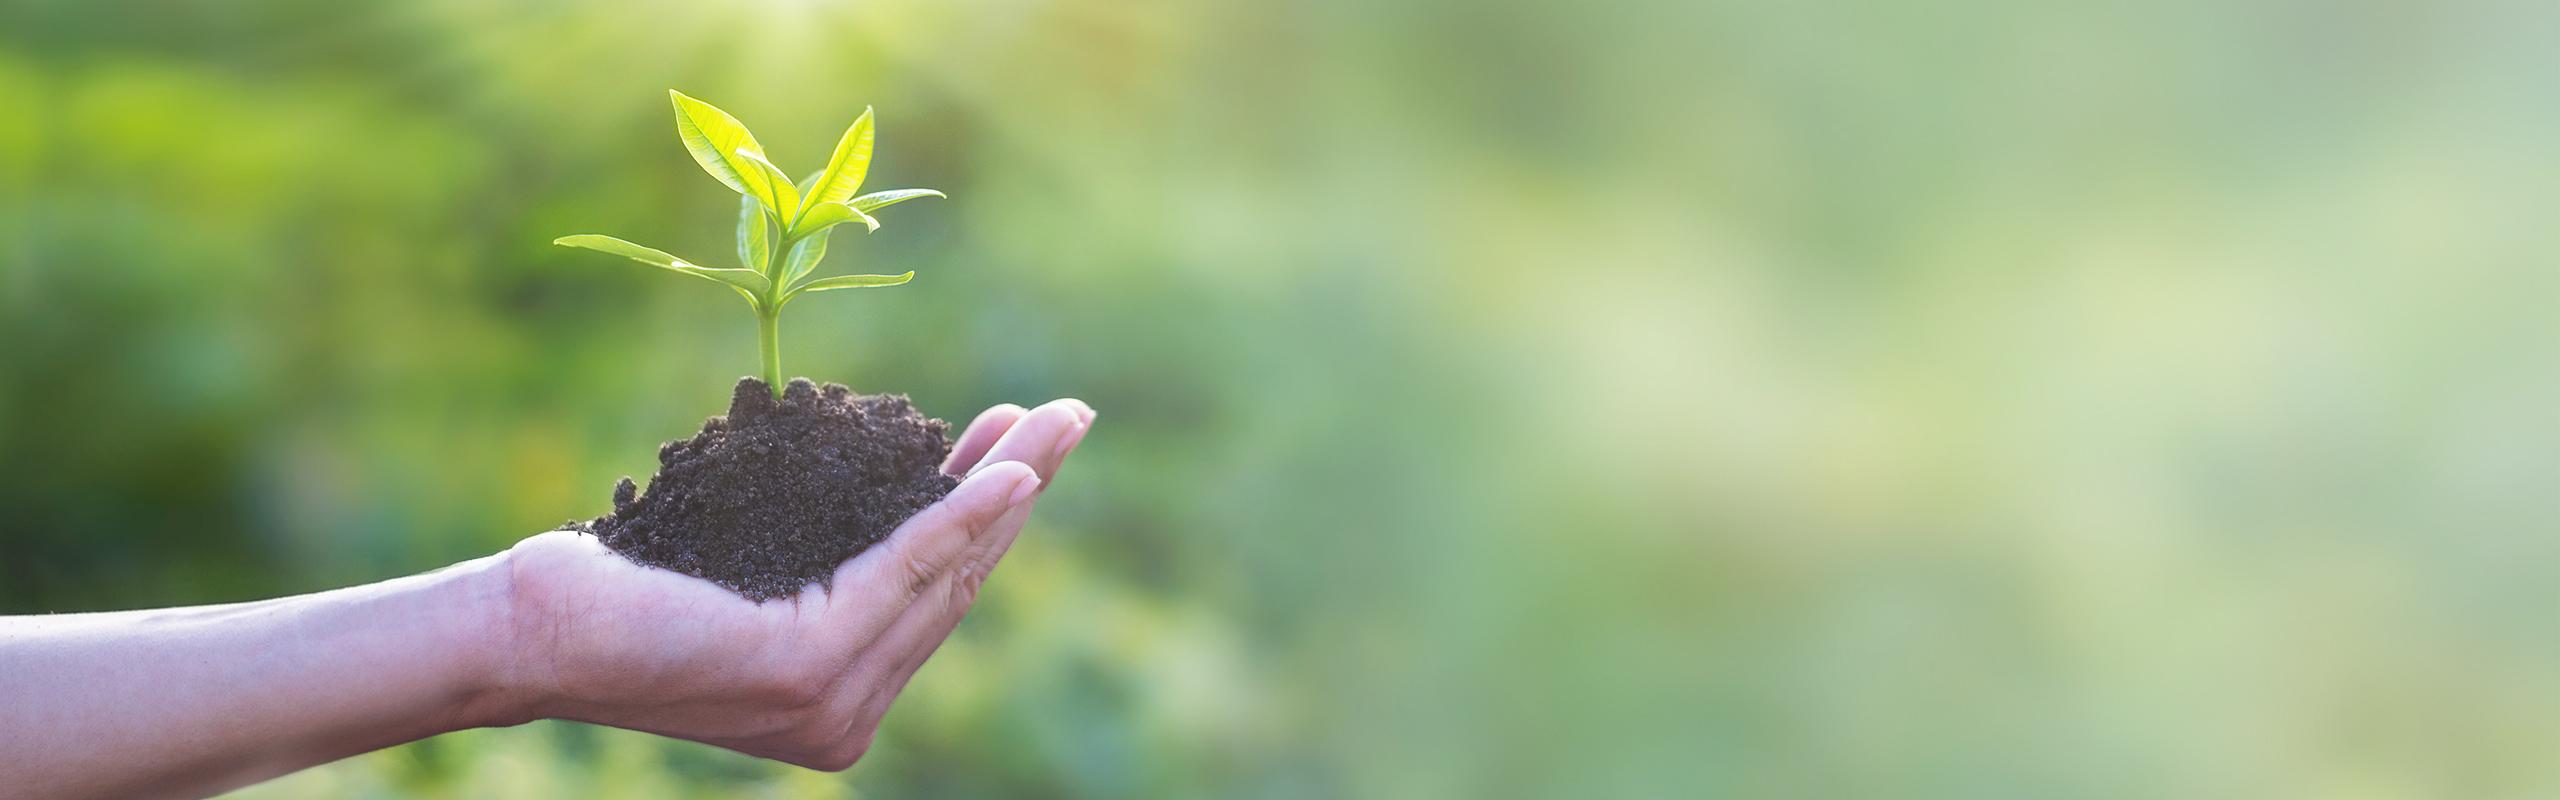 BRITA durabilité mains tenant terre avec plante